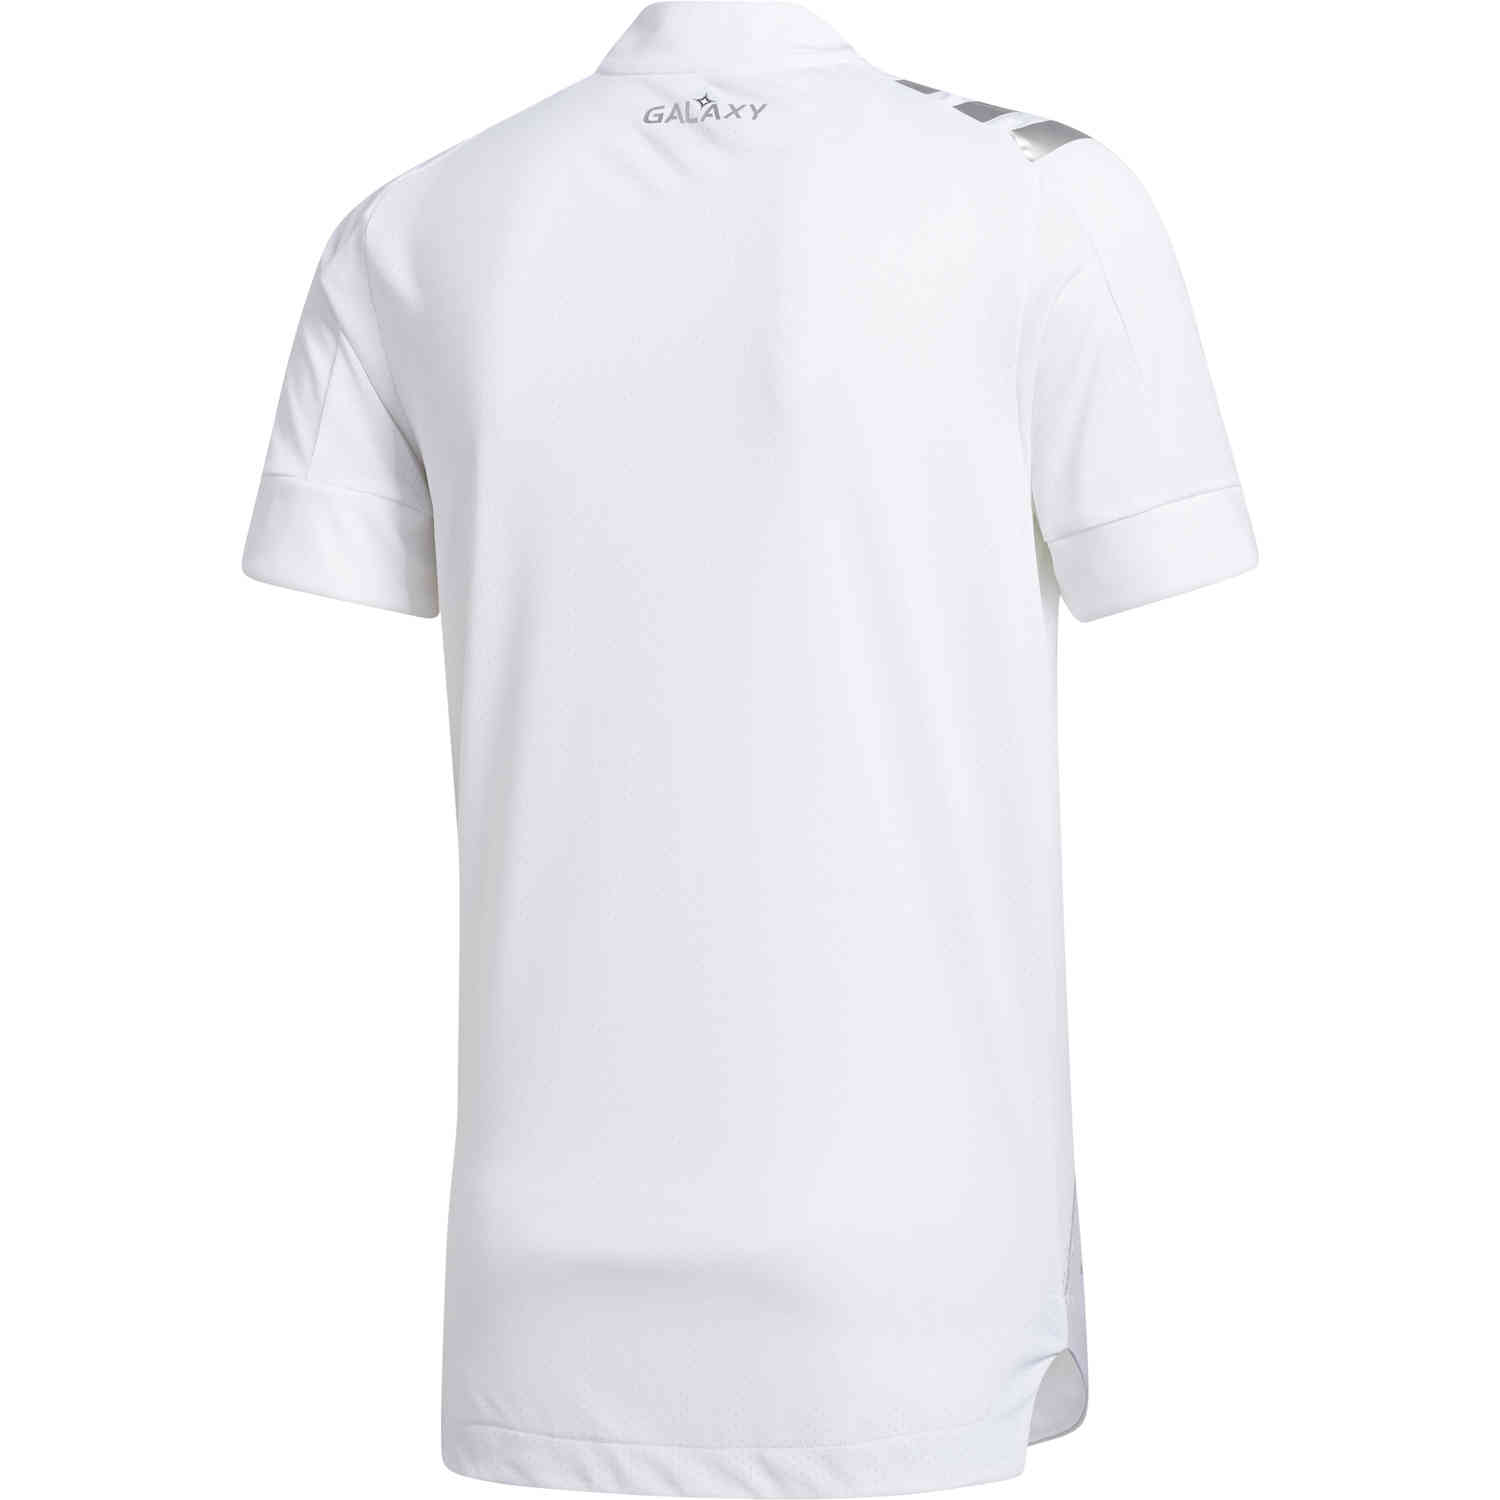 LA Galaxy adidas Game Jersey - Soccer Men's White New M